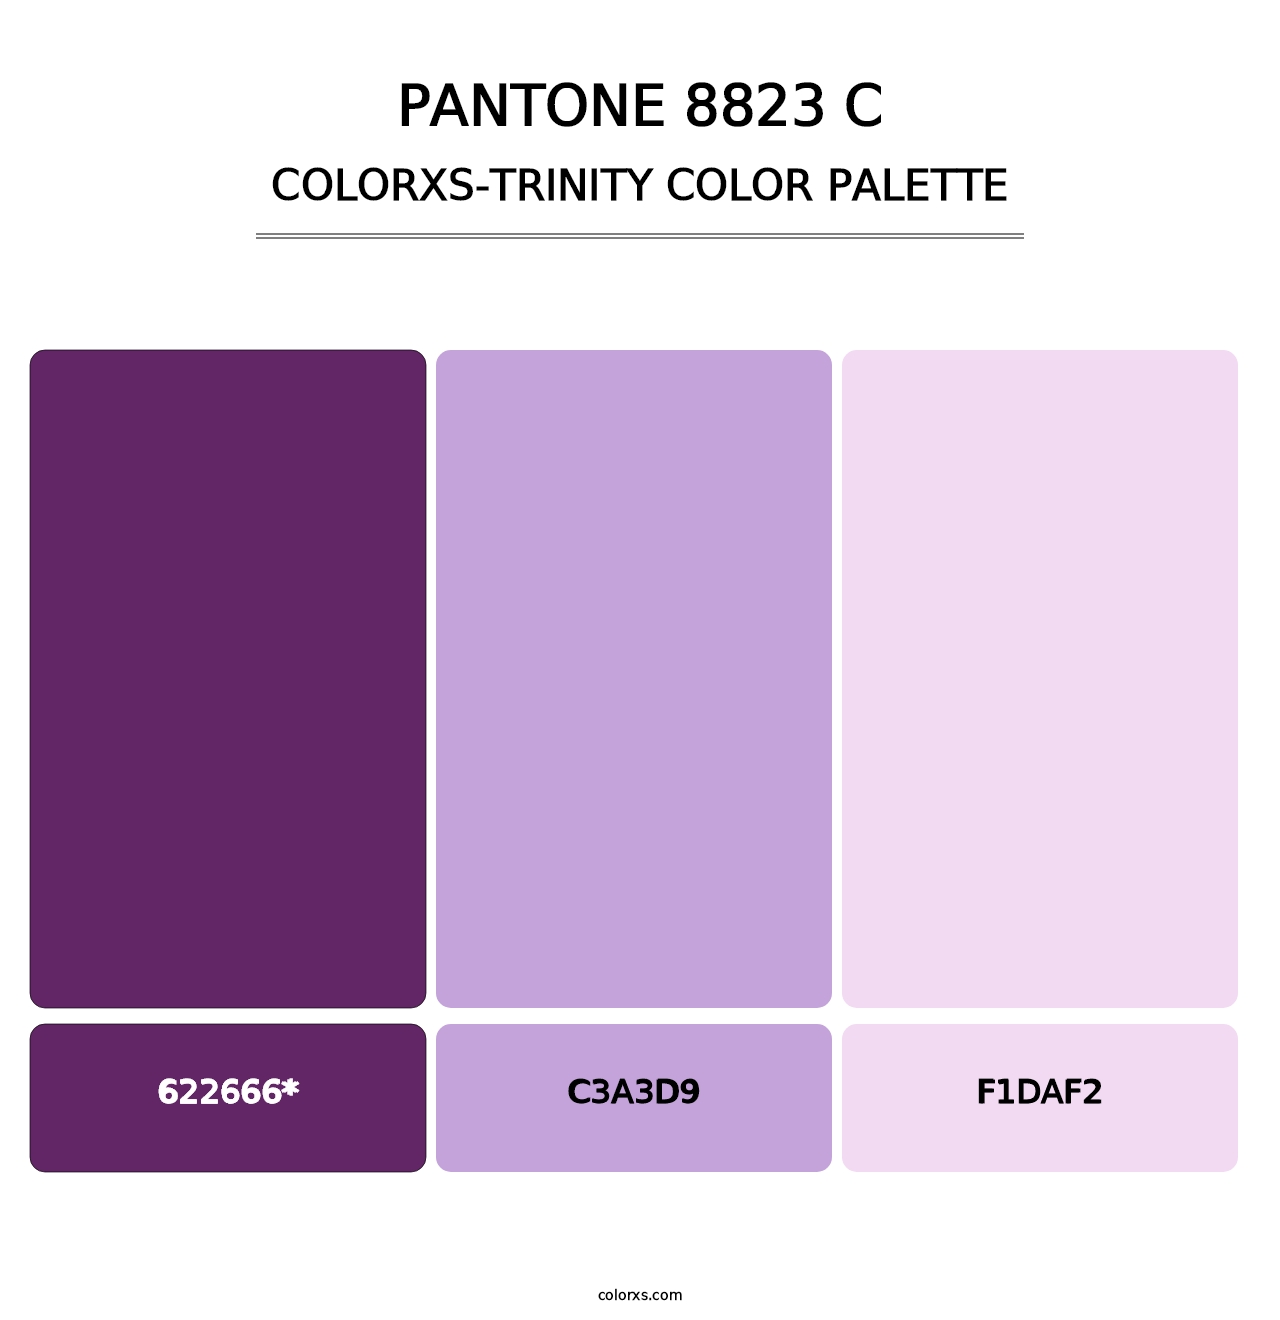 PANTONE 8823 C - Colorxs Trinity Palette